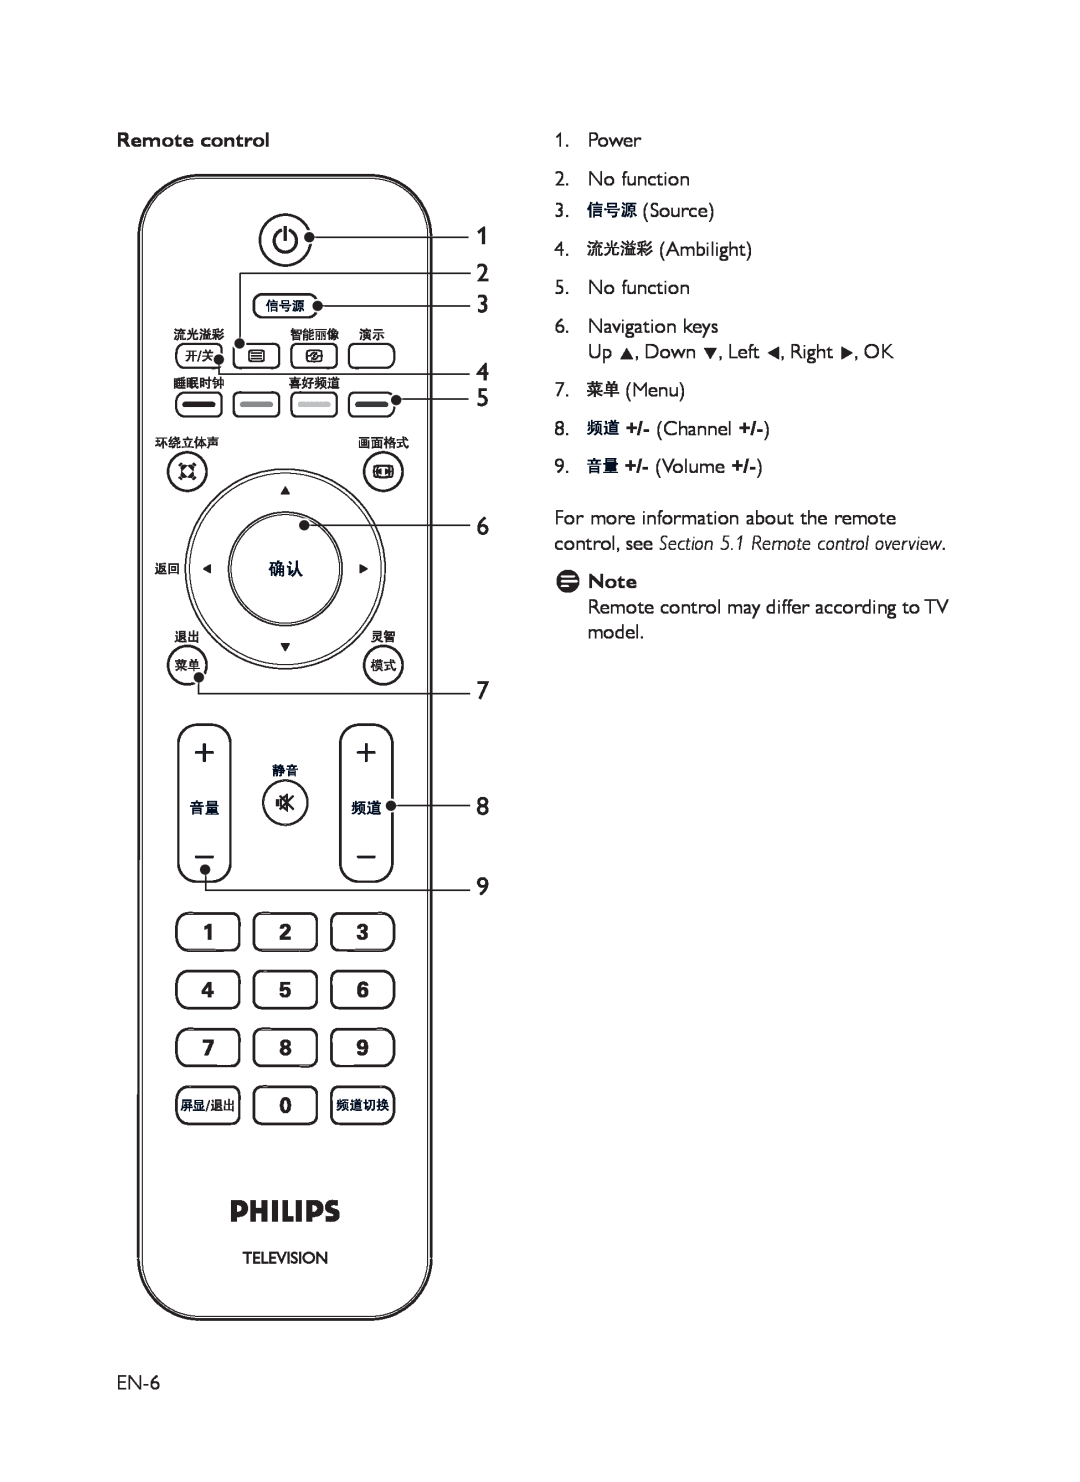 Philips 42PFL7403 Remote control, Power 2.No function 3.Source 4.Ambilight, No function 6.Navigation keys, DNote, EN-6 